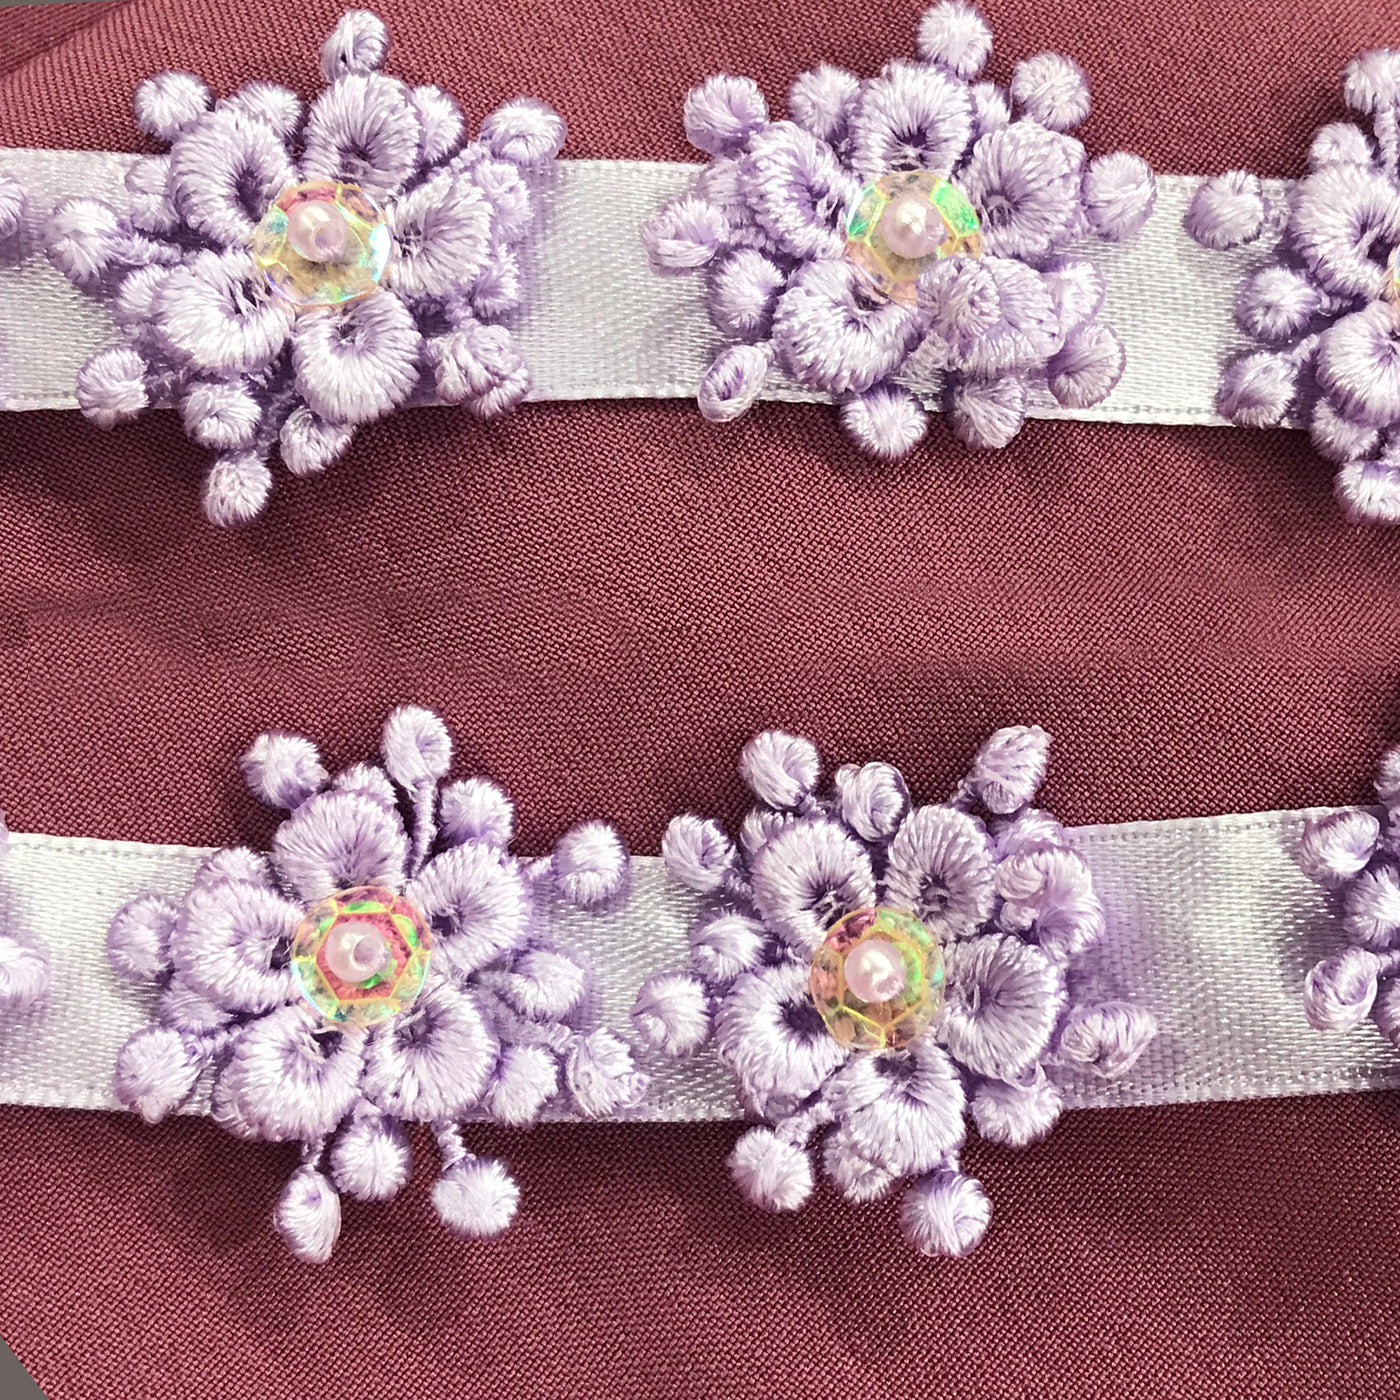 3D Beaded Flower motif on Ribbon Trim Lilac Lace Usa